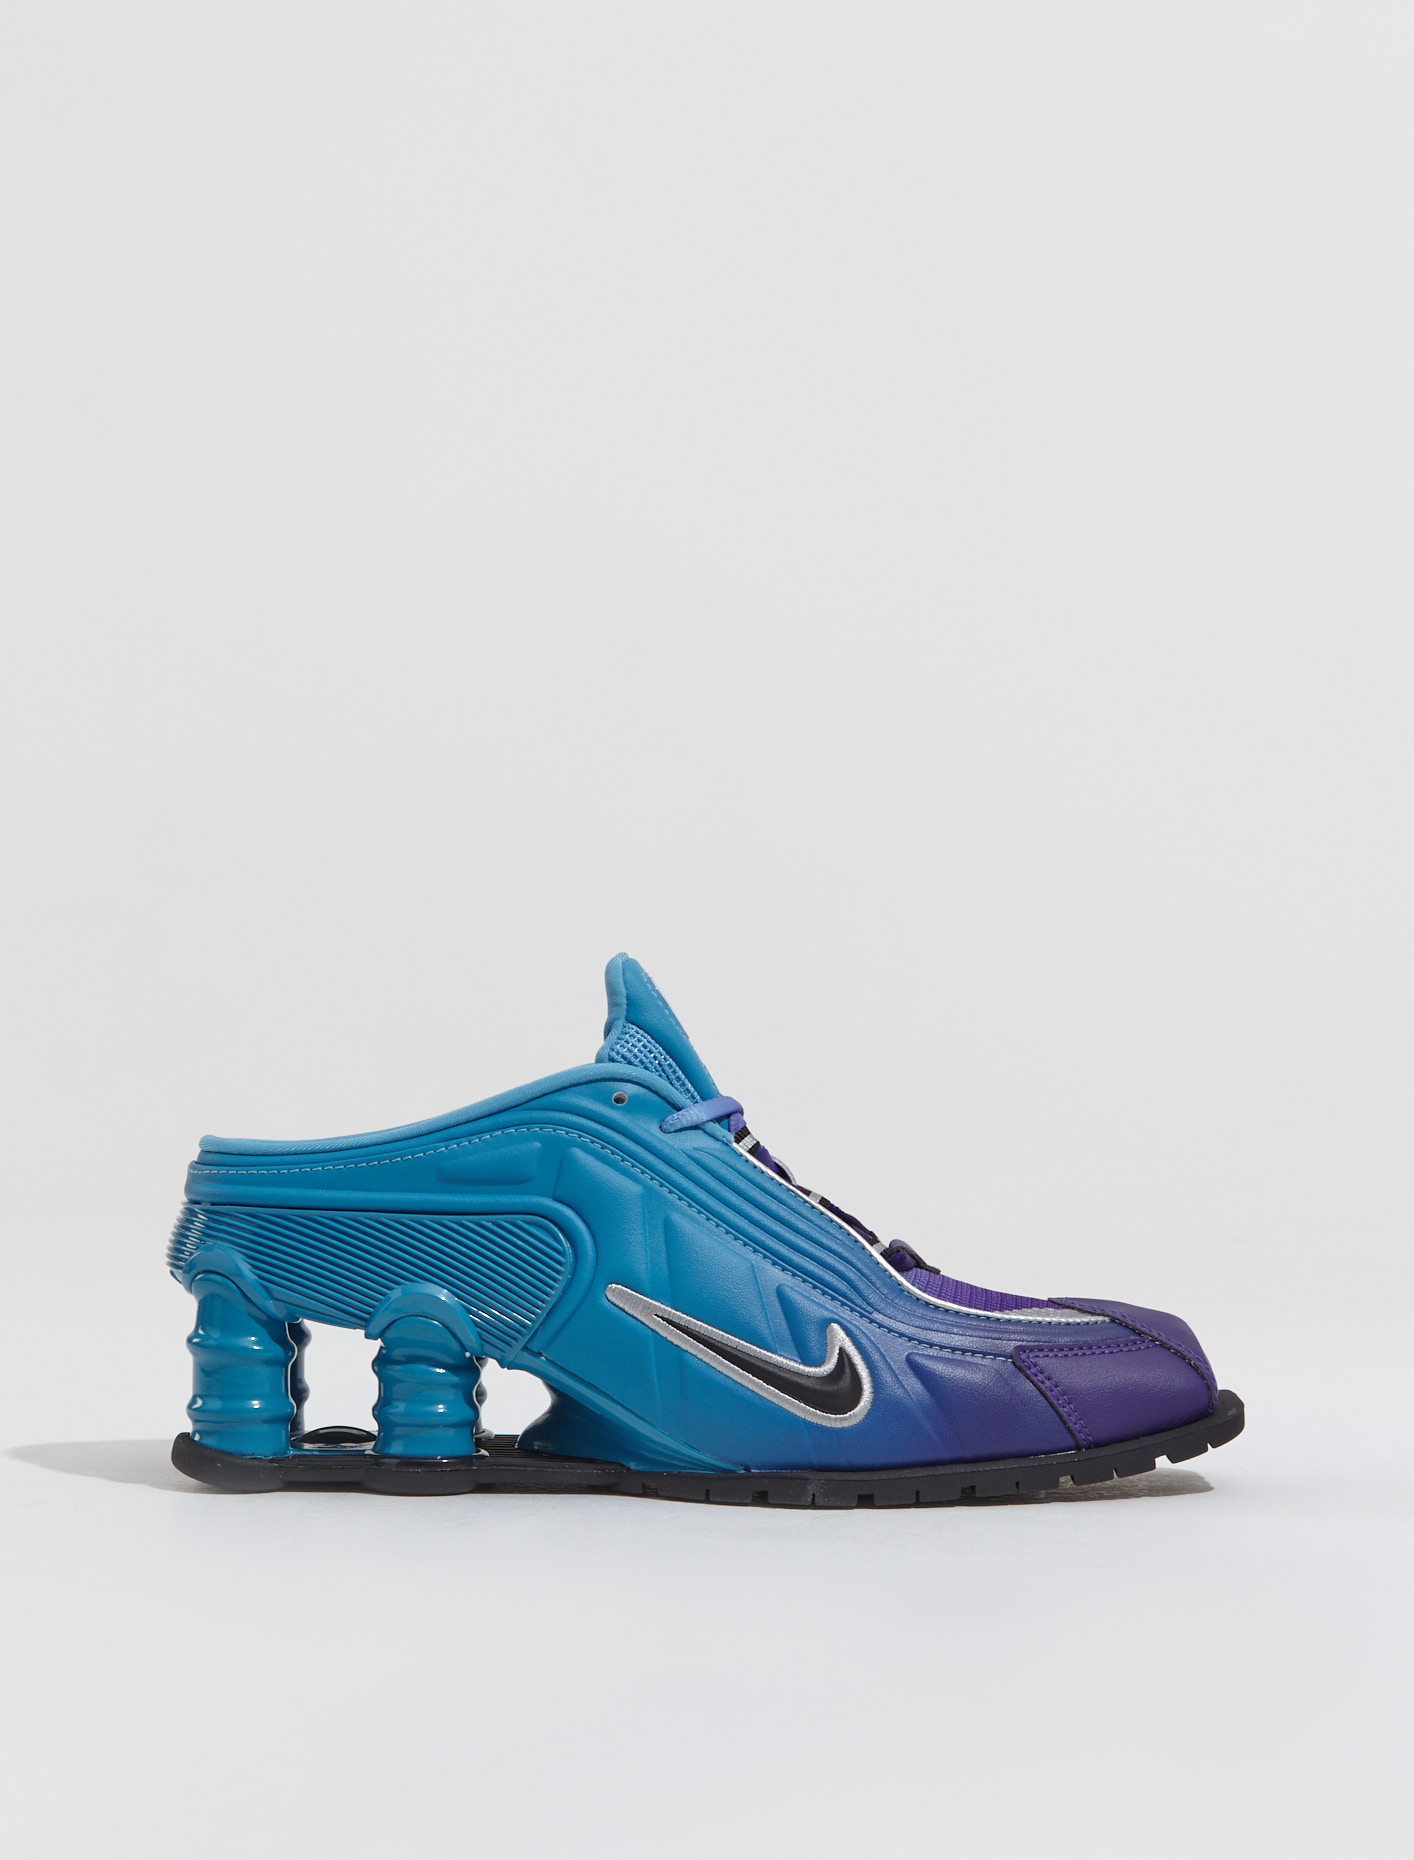 Nike x Martine Rose Shox MR4 Sneaker in Scuba Blue | Voo Store